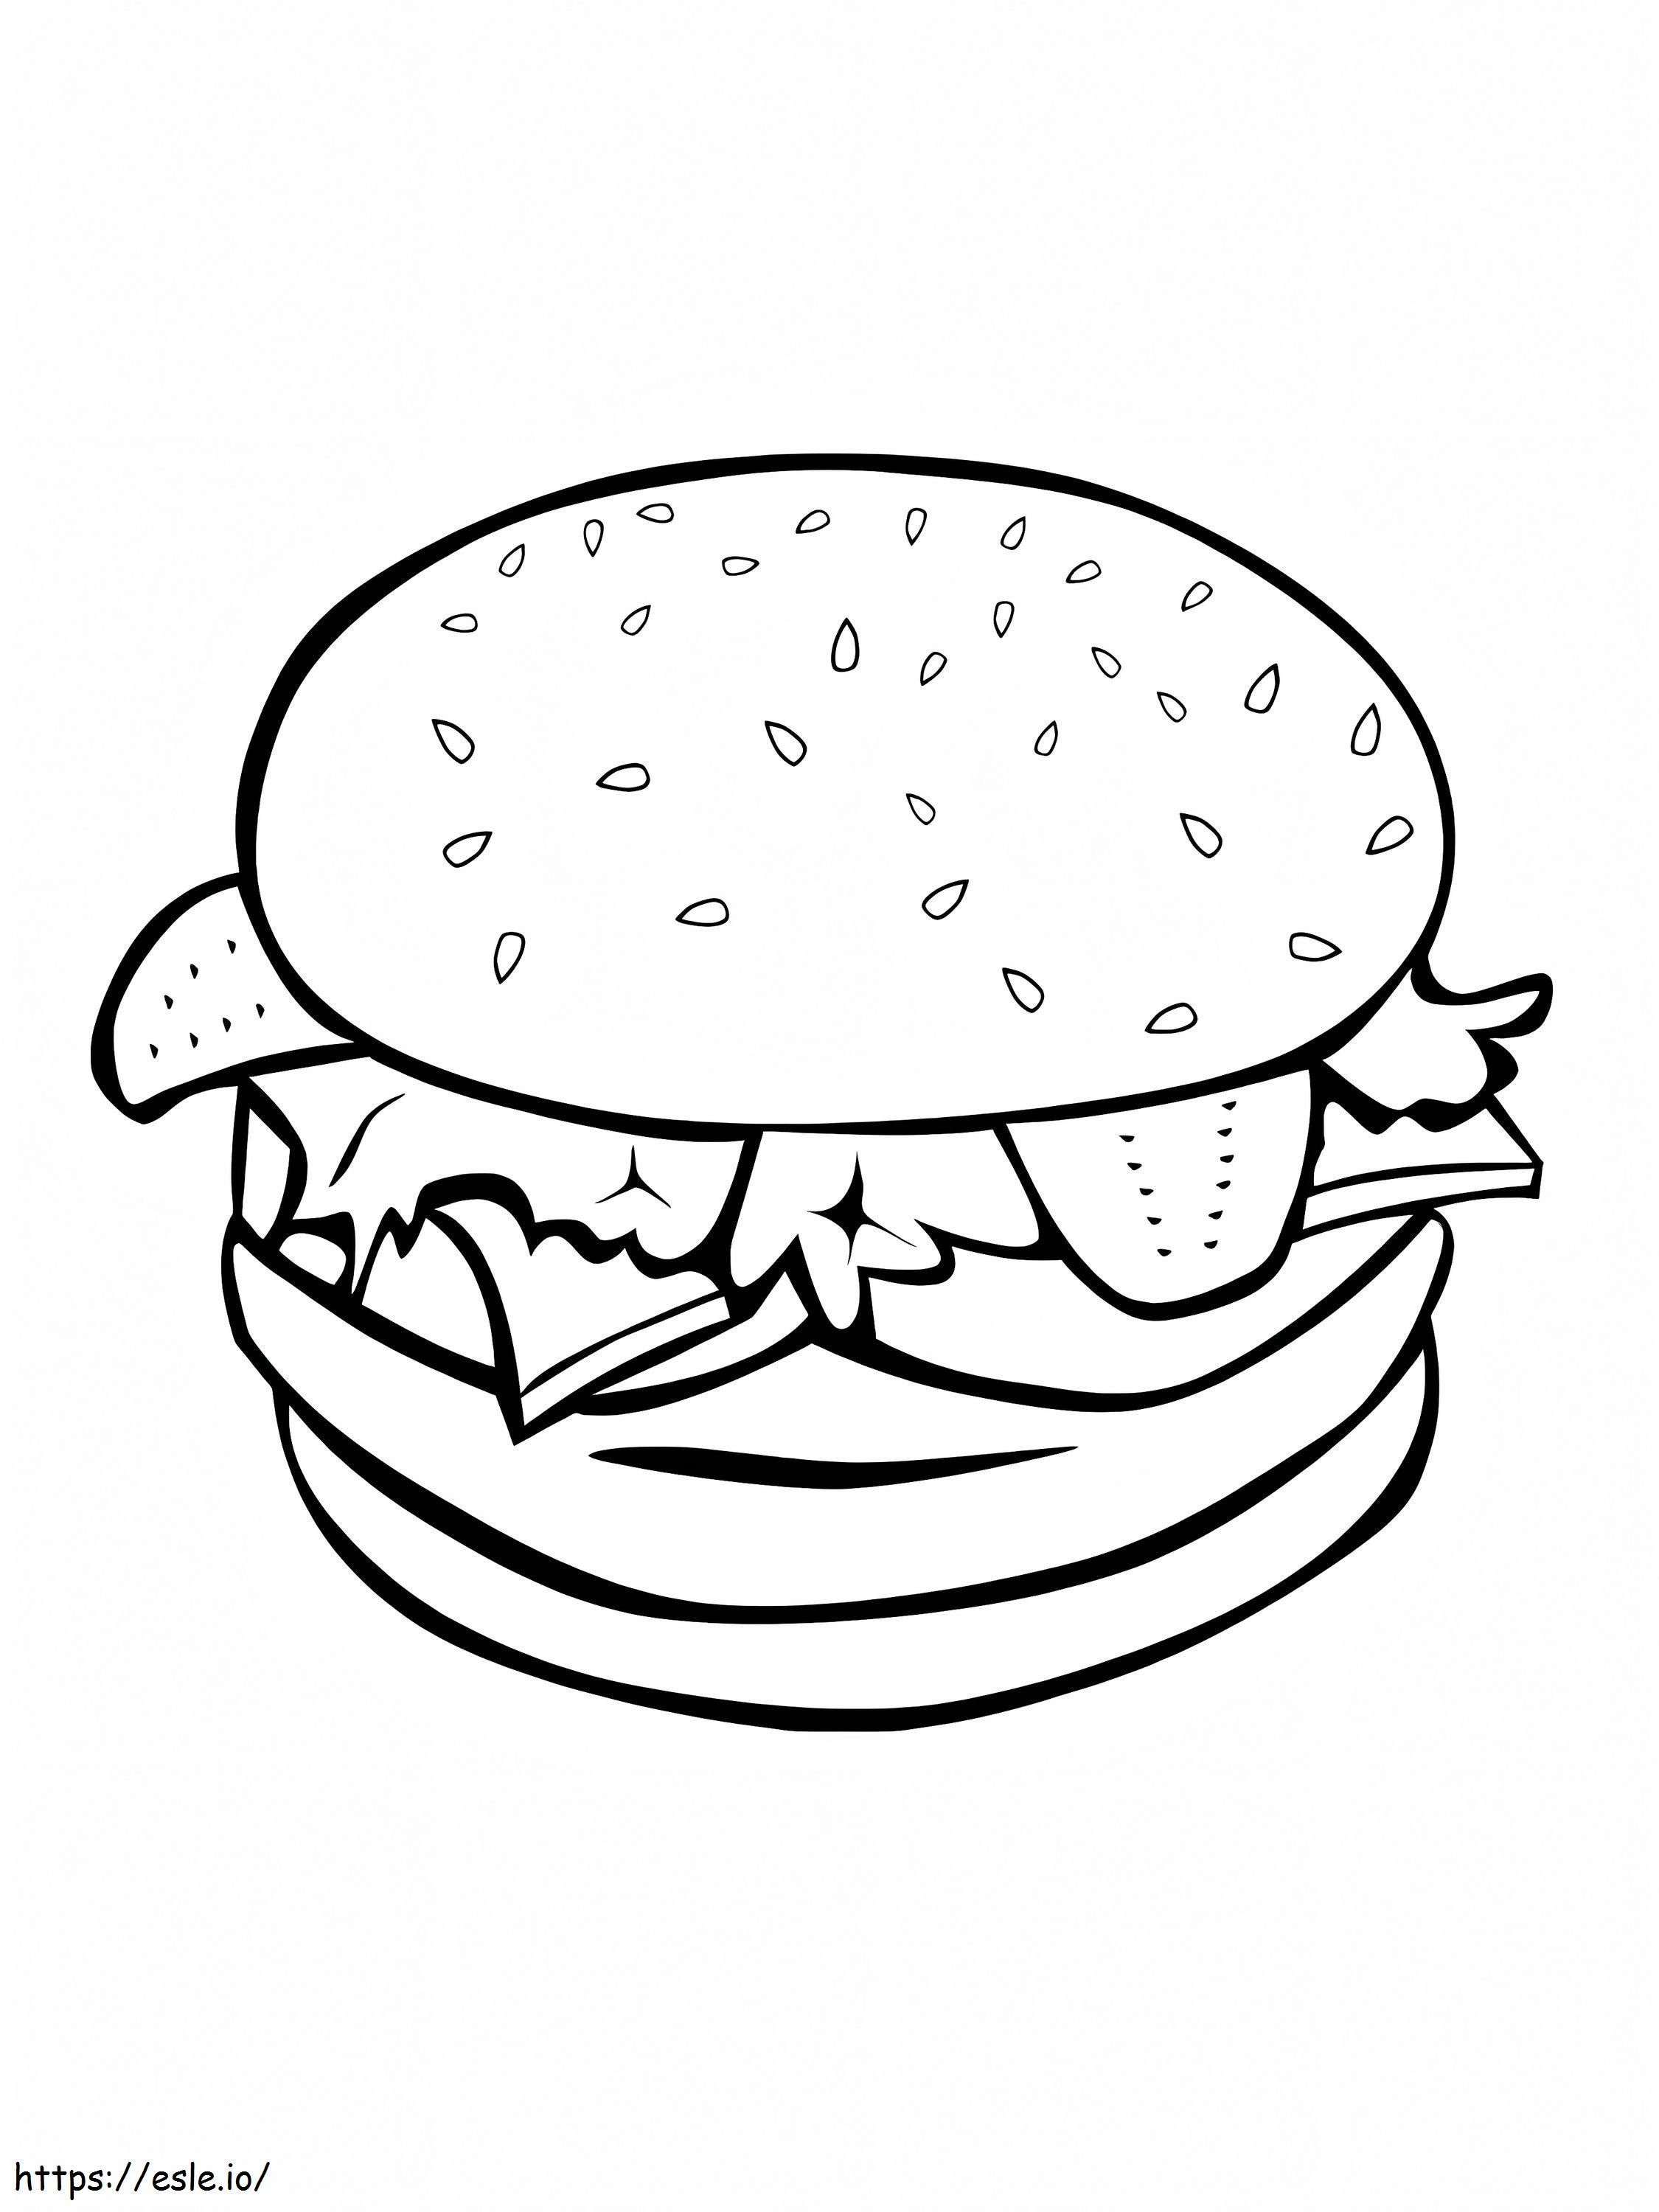 Regular Burger coloring page